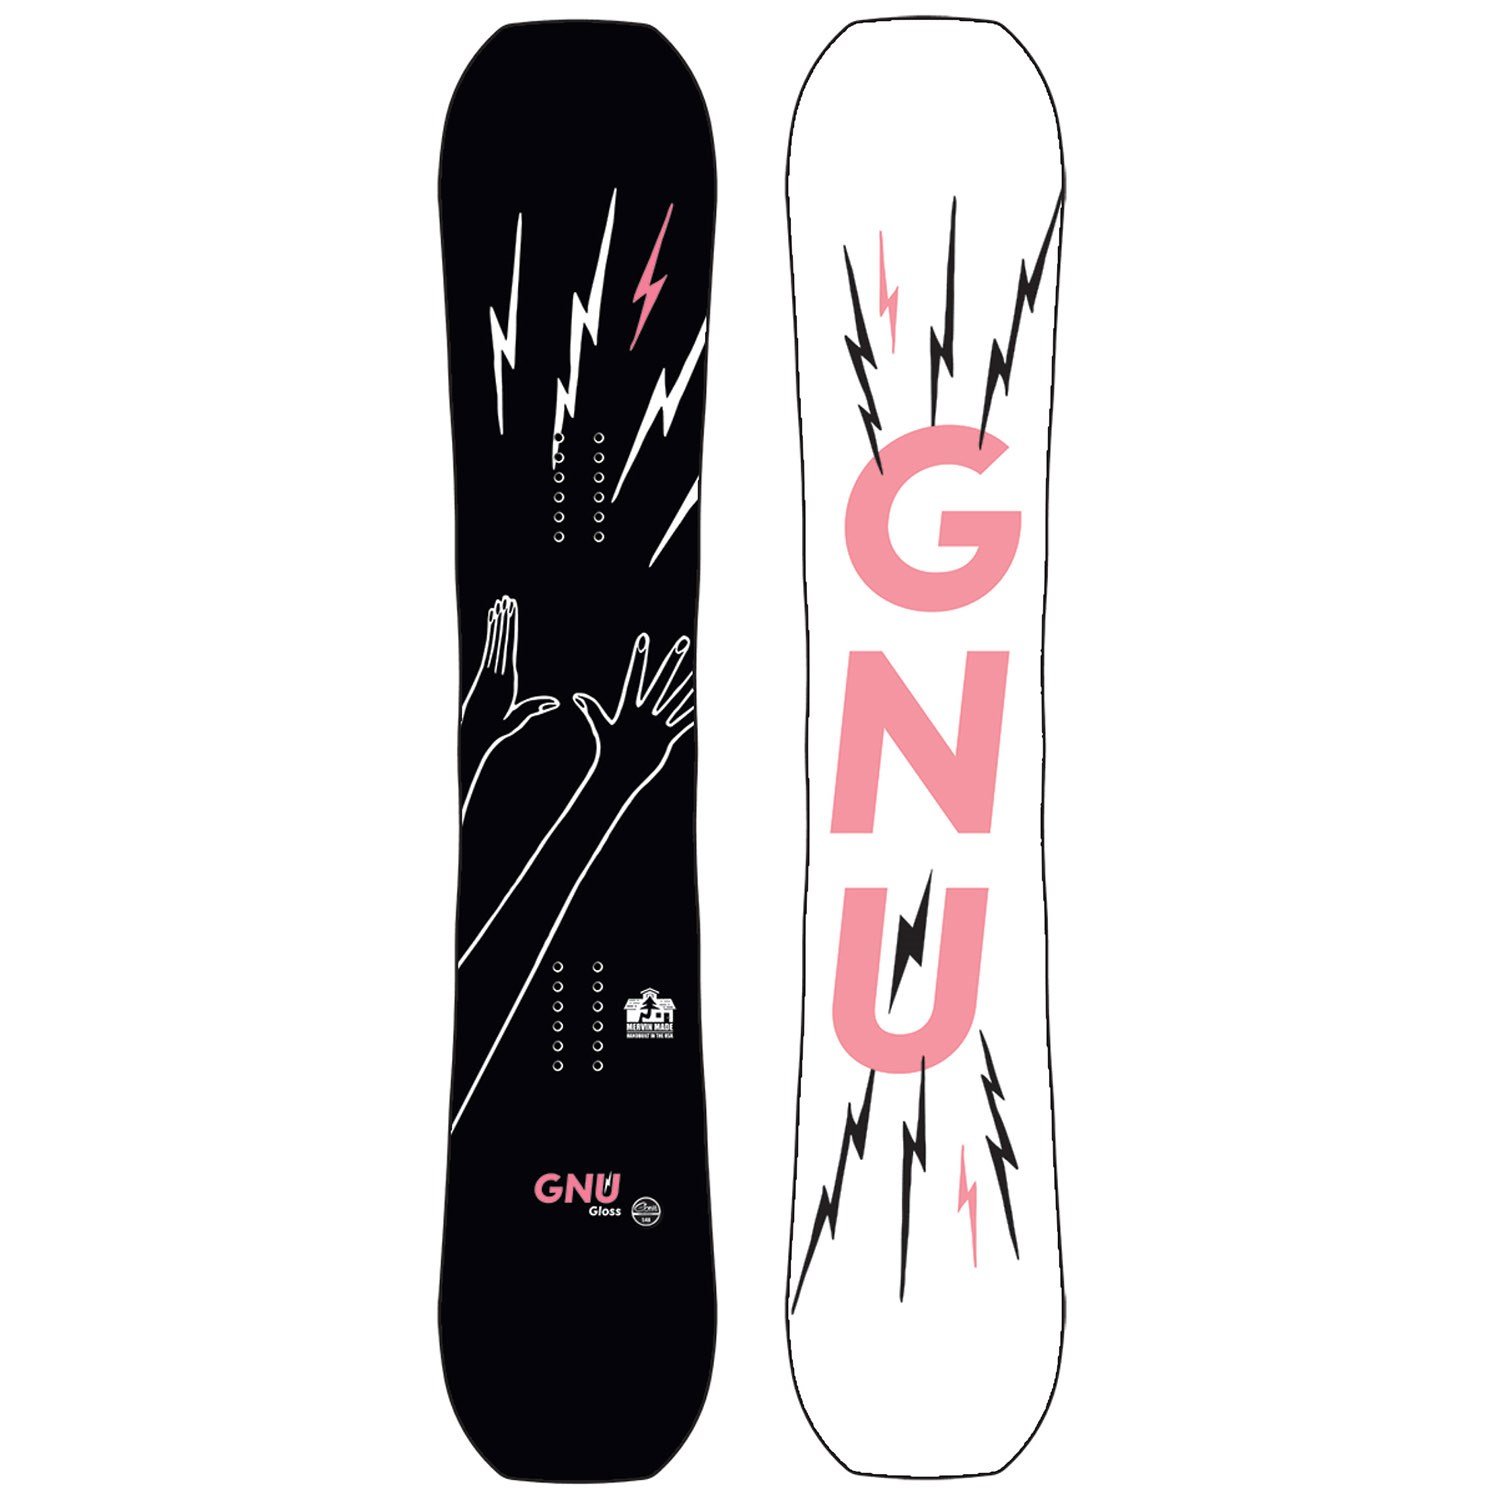 2 x JONES Snowboard Logo Decal Stickers in White Gloss 